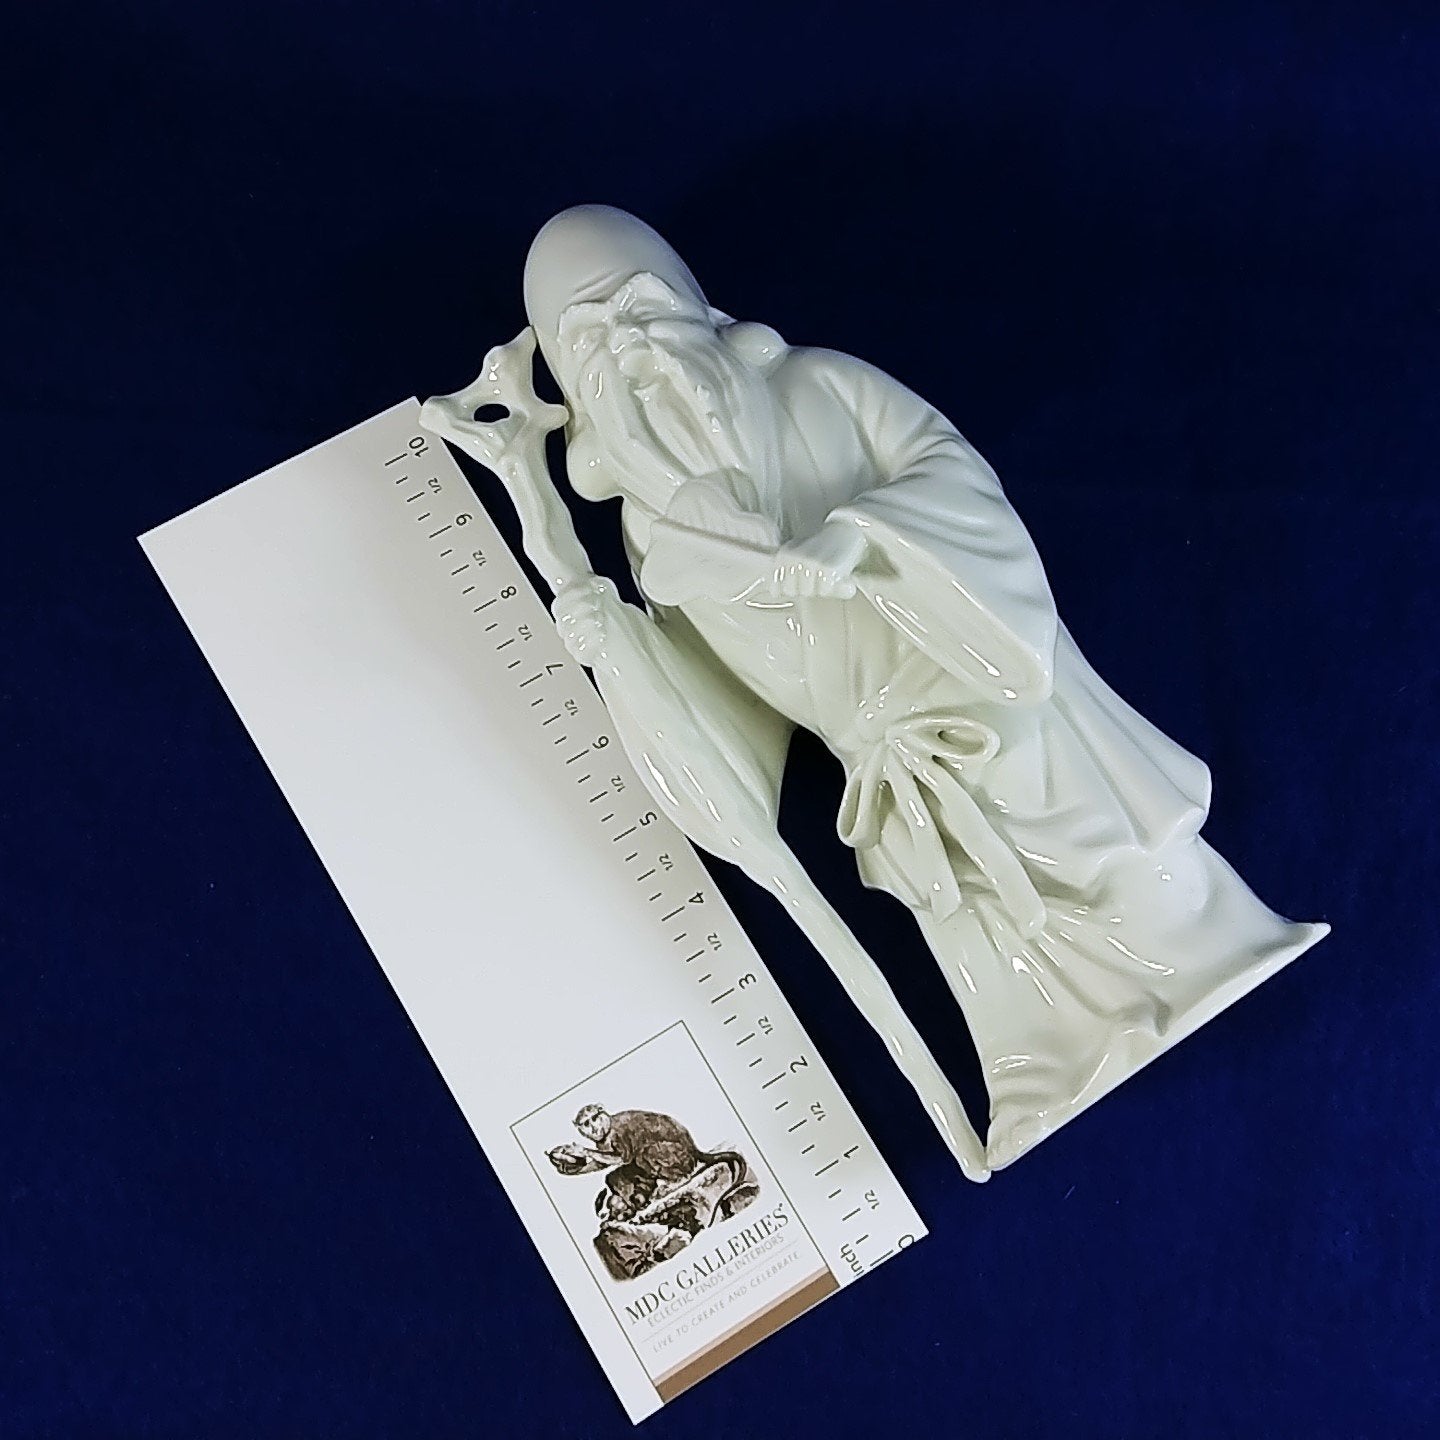 OMC Mexico Asian Male Blanc de Chine White Figurine Original Gold Foil Decal